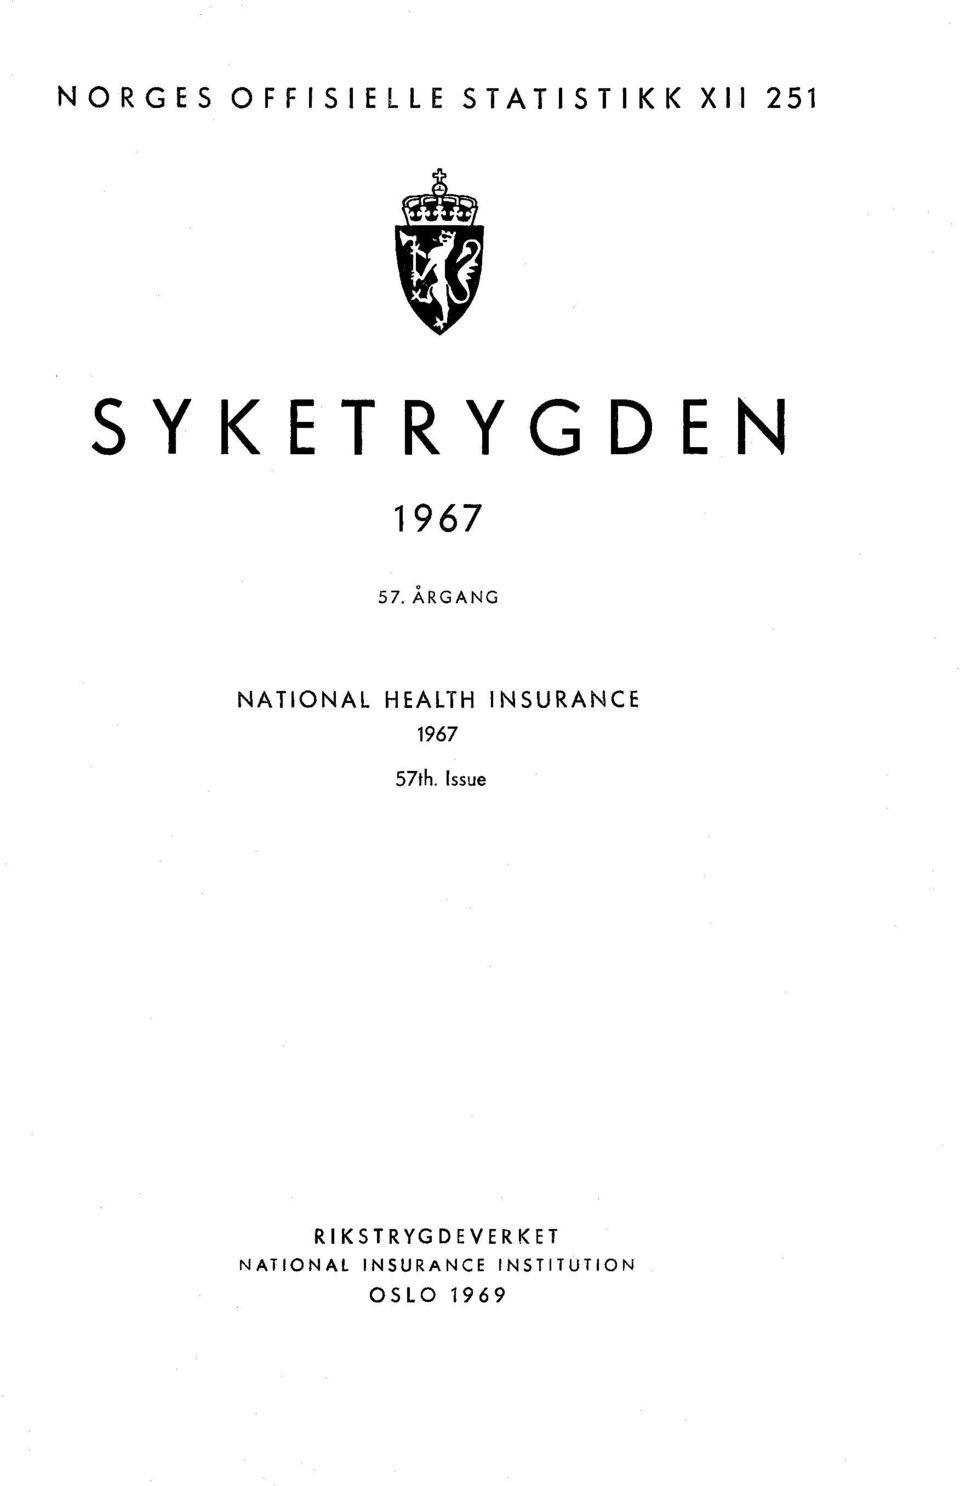 ÅRGANG NATIONAL HEALTH INSURANCE 1967